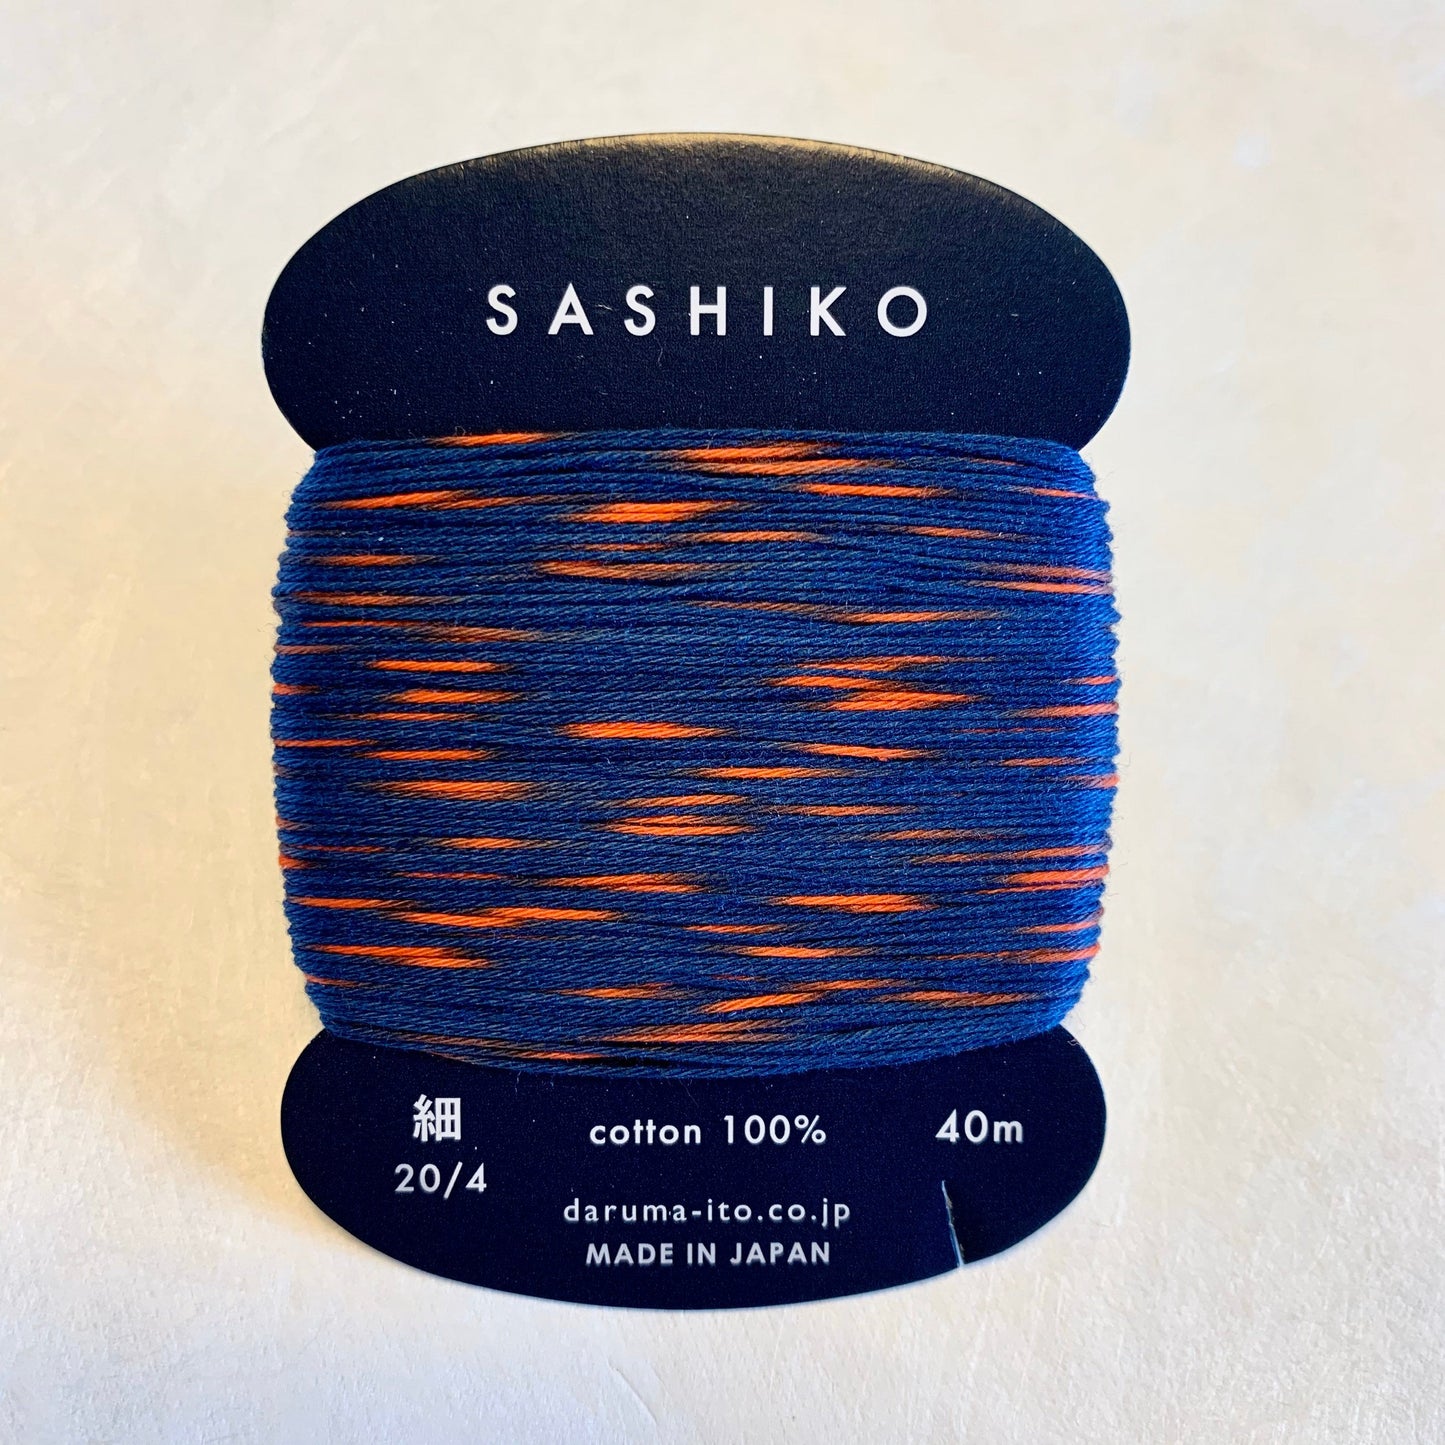 Daruma #302 "SPARKLER" variegated navy blue and flame red Japanese Cotton SASHIKO thread 40 meter skein 20/4